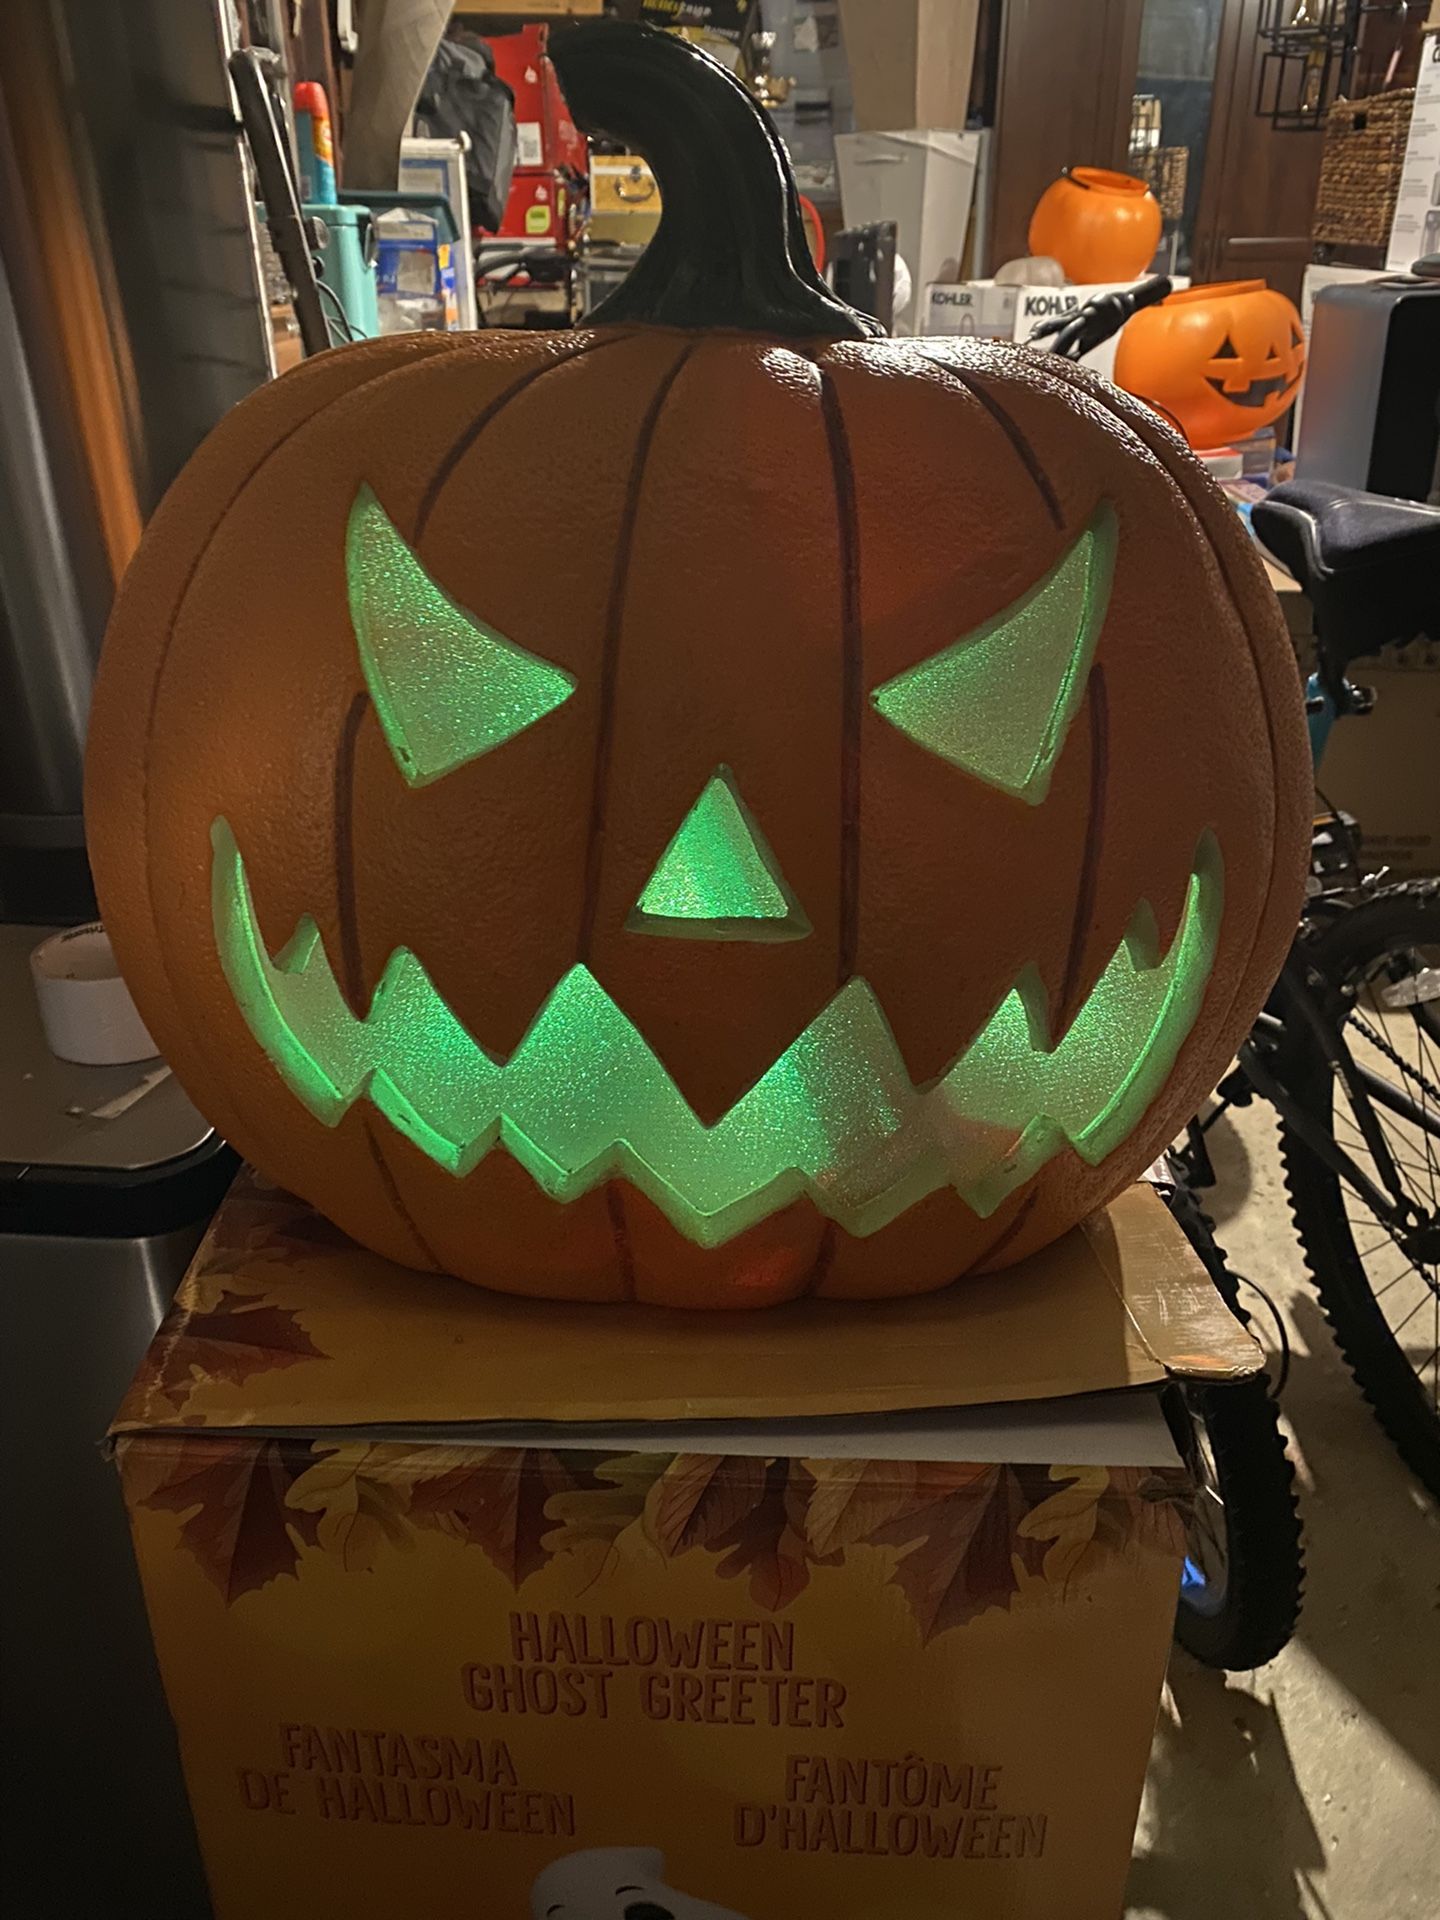 Halloween pumpkin with multi-colored flickering leb lights